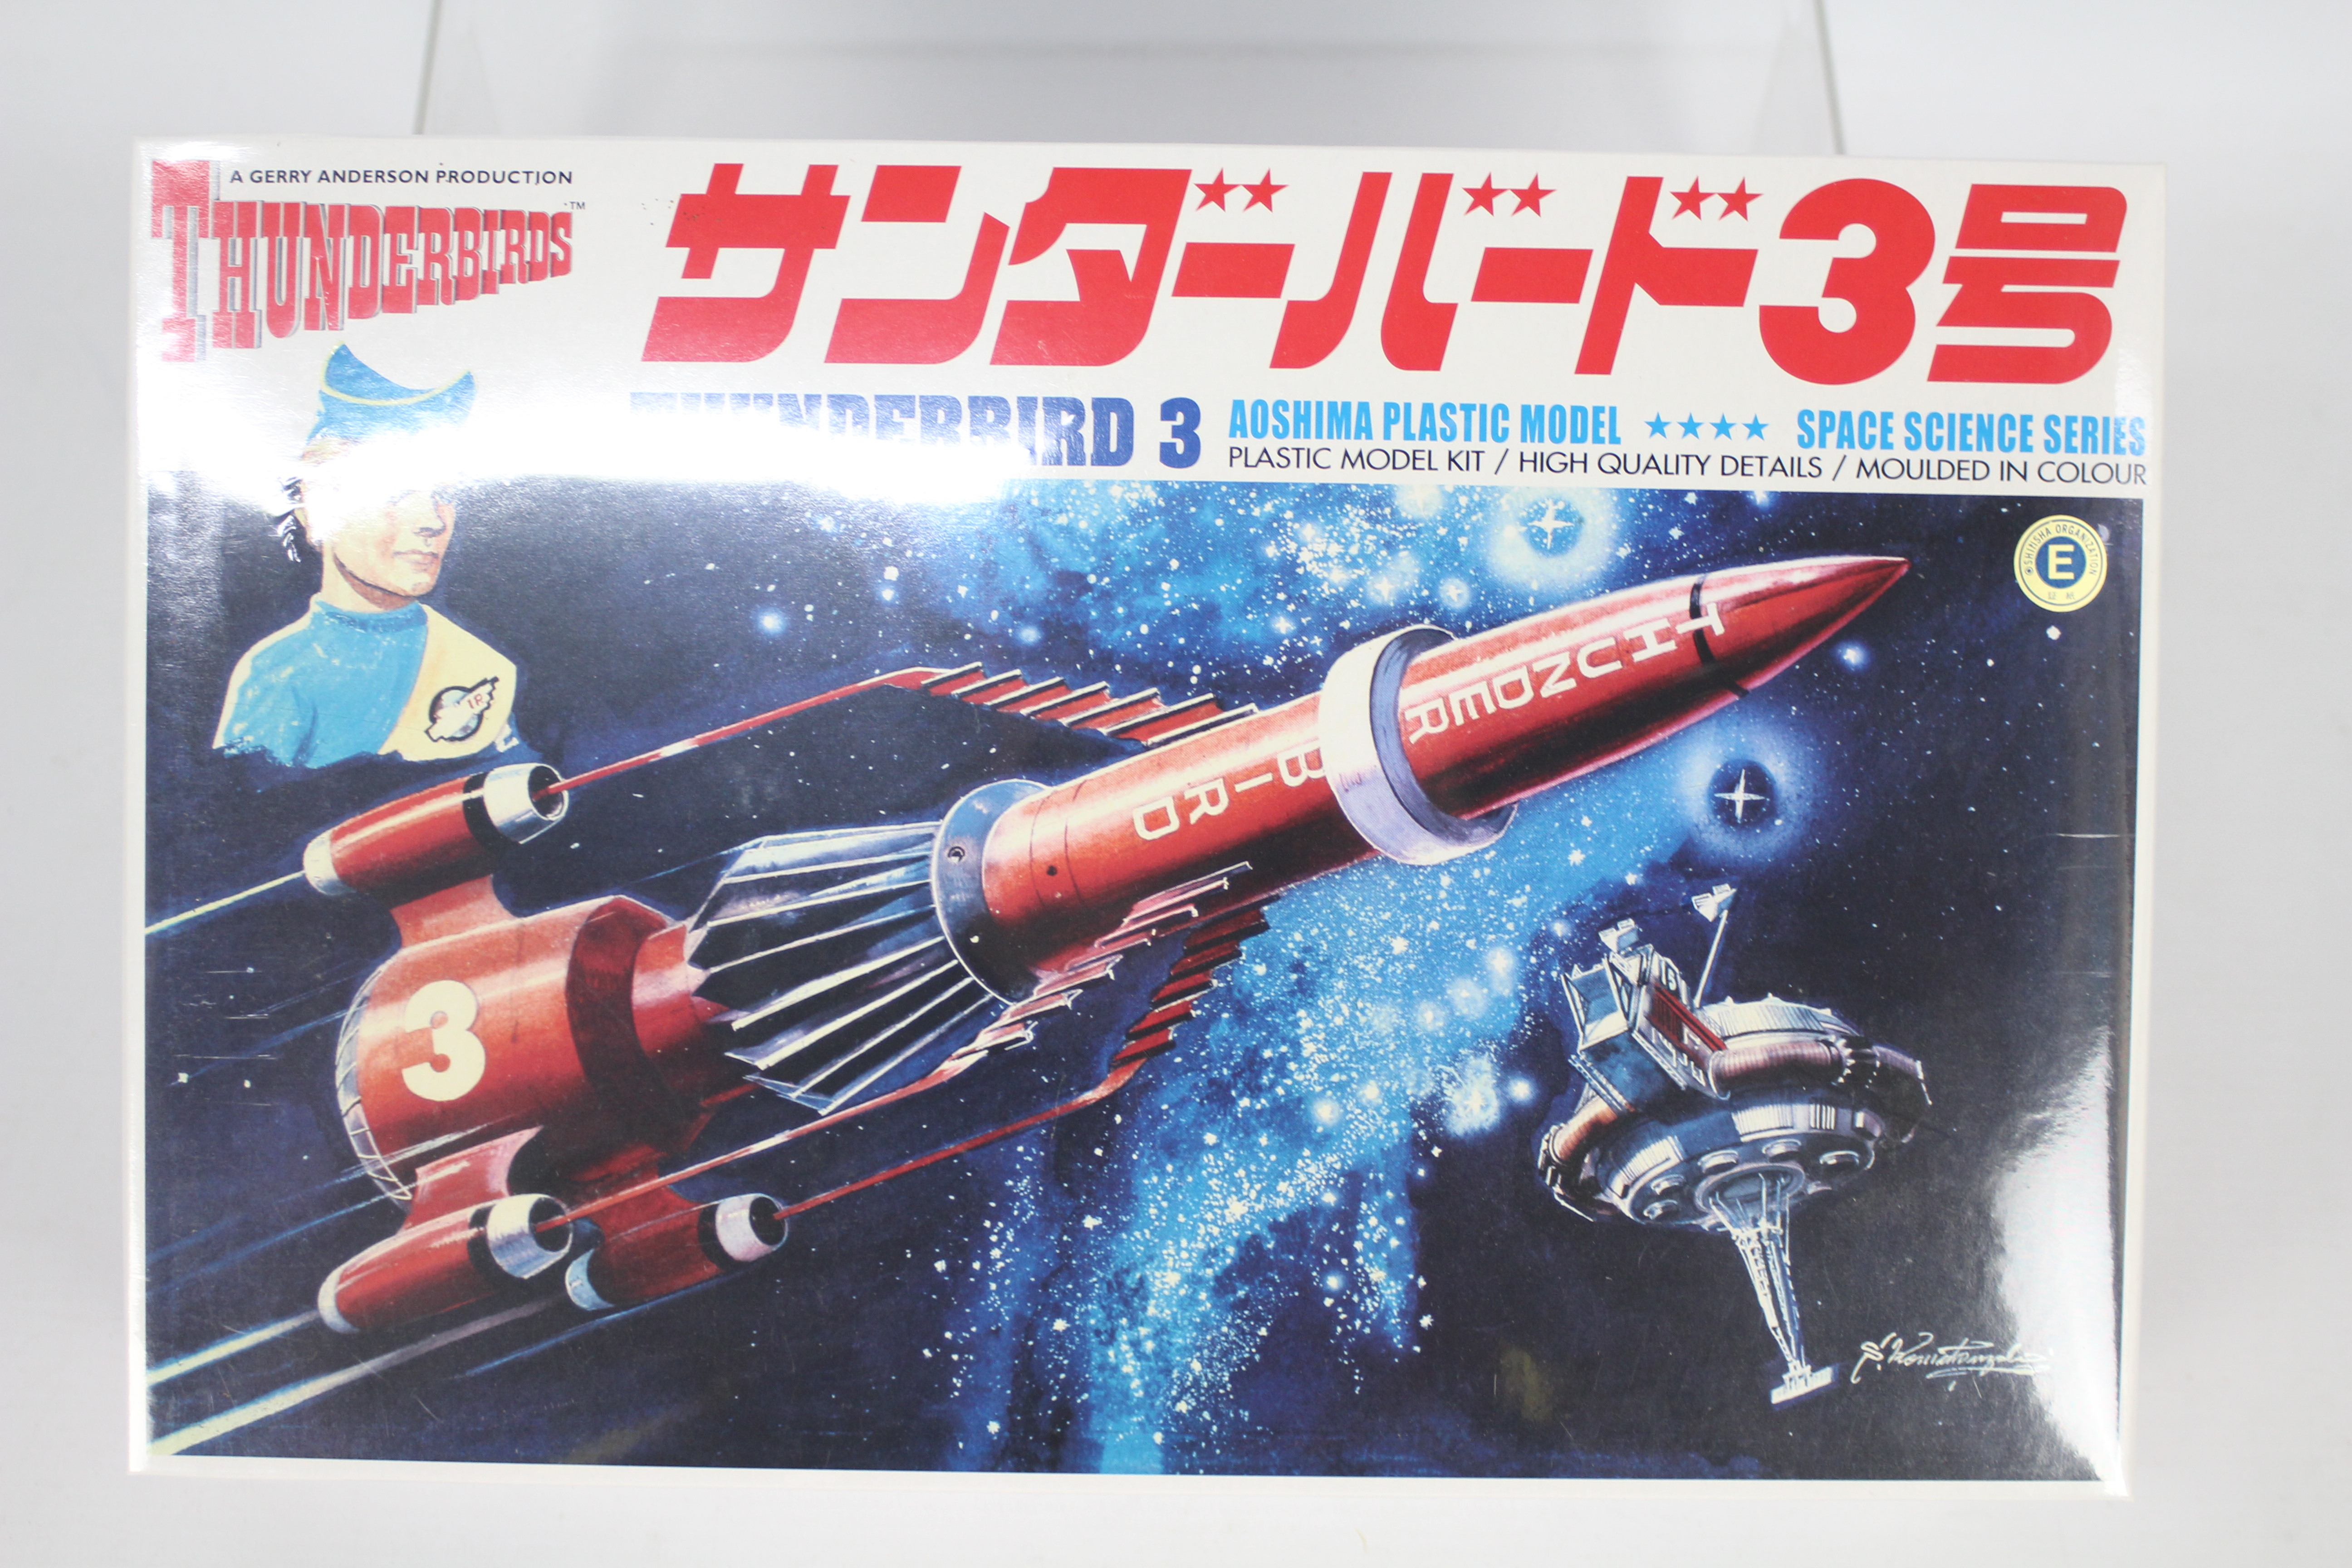 Aoshima - Two boxed 'Thunderbirds' plastic model kits from Aoshima. - Image 3 of 3